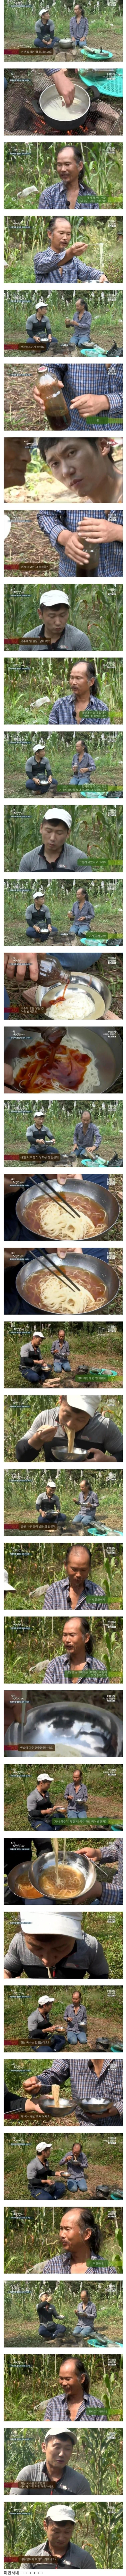 Natural Lee Seungyoon honey noodles incident.jpg